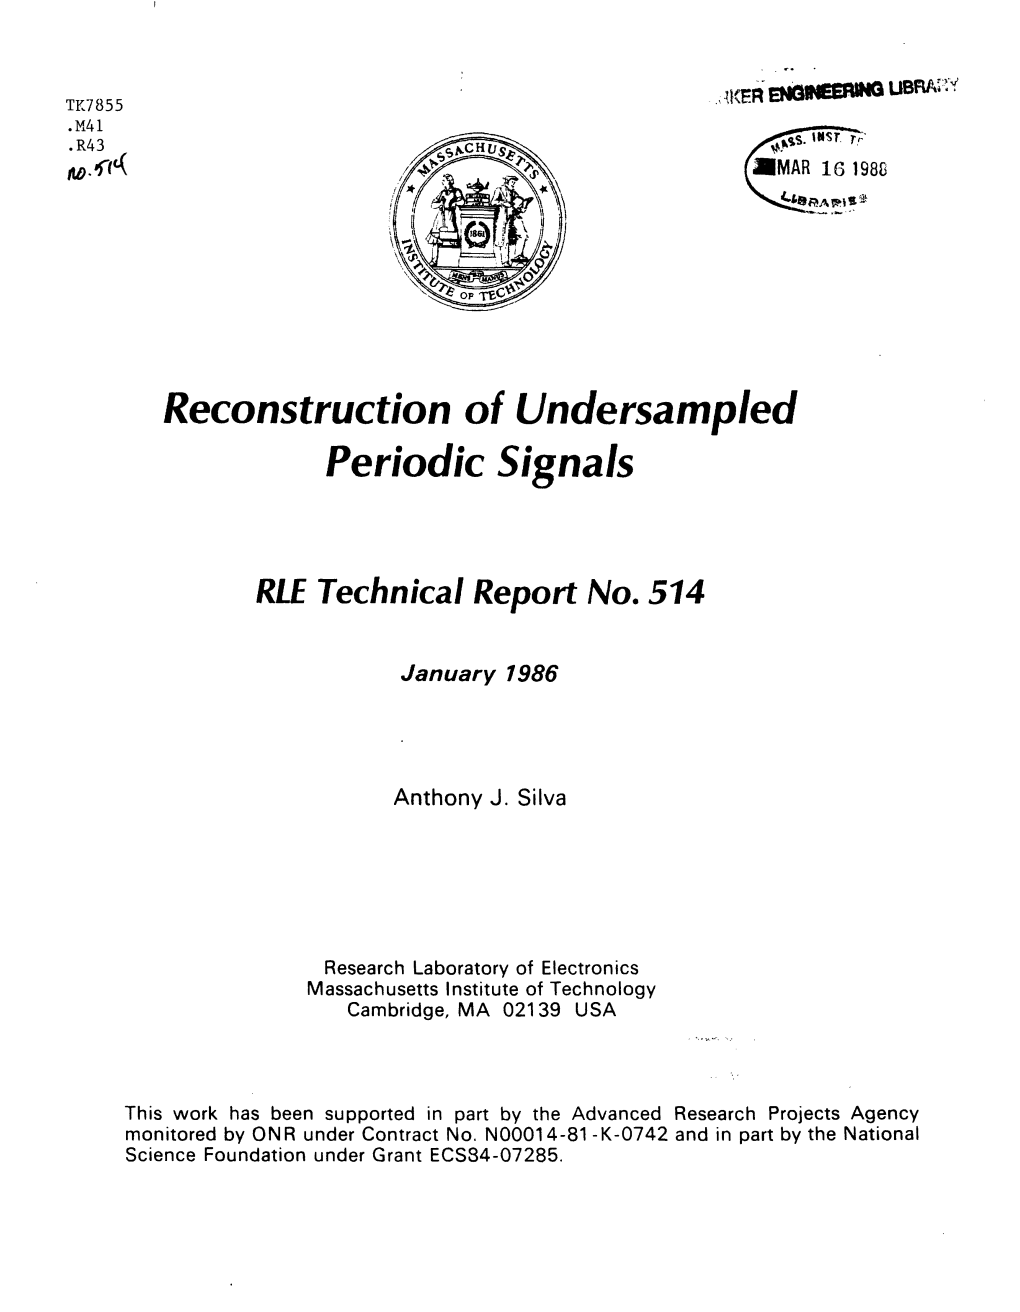 Reconstruction of Undersampled Periodic Signals